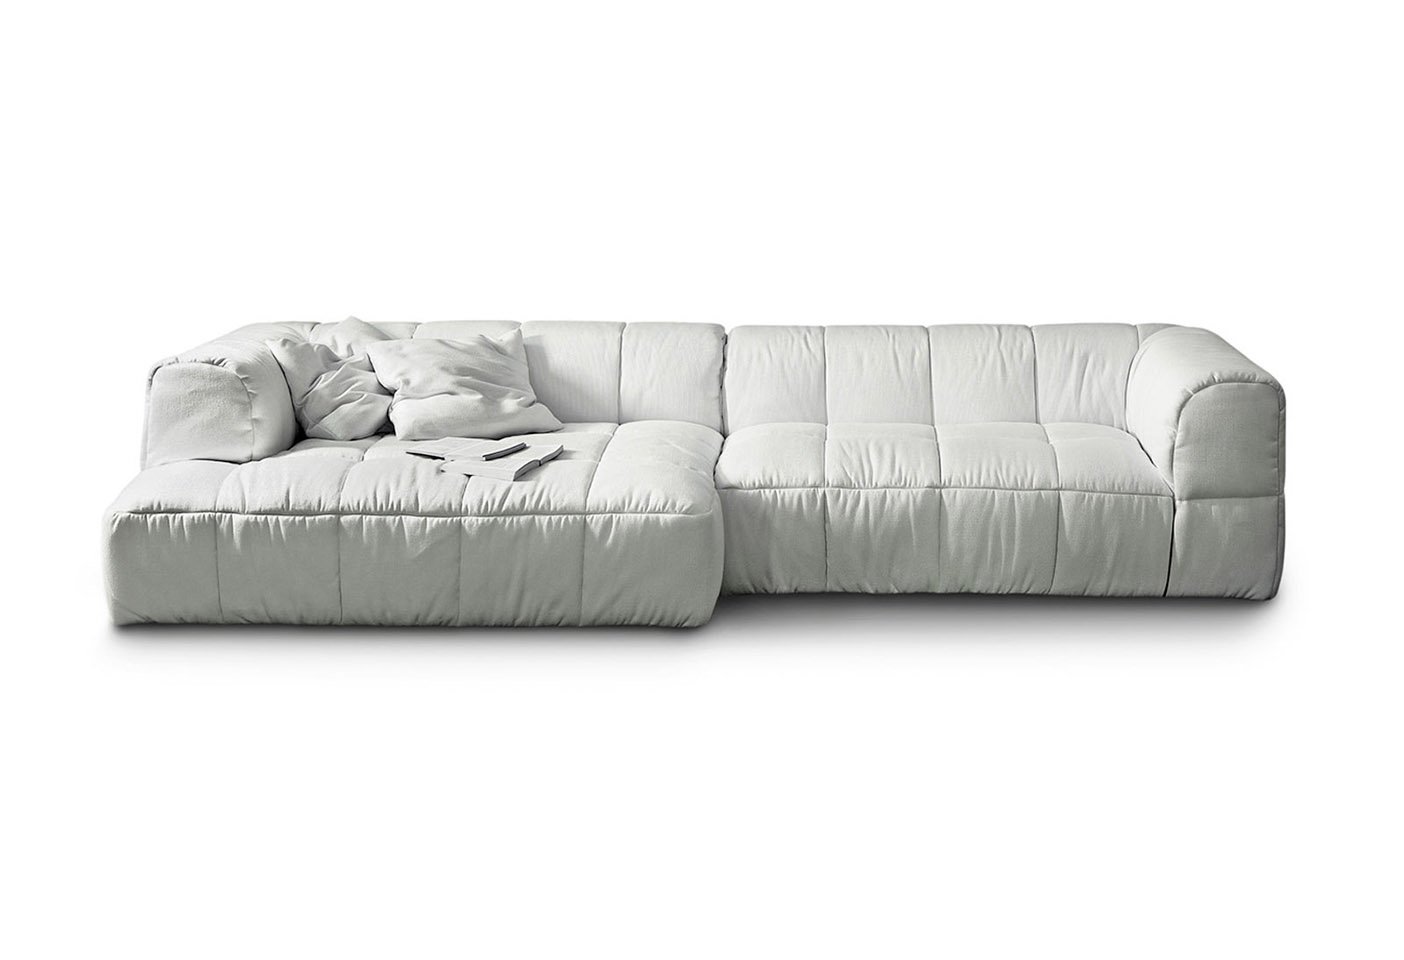 The 1968-designed Strips sofa is still produced by the Italian furniture brand Arflex. Photo c/o Arflex.